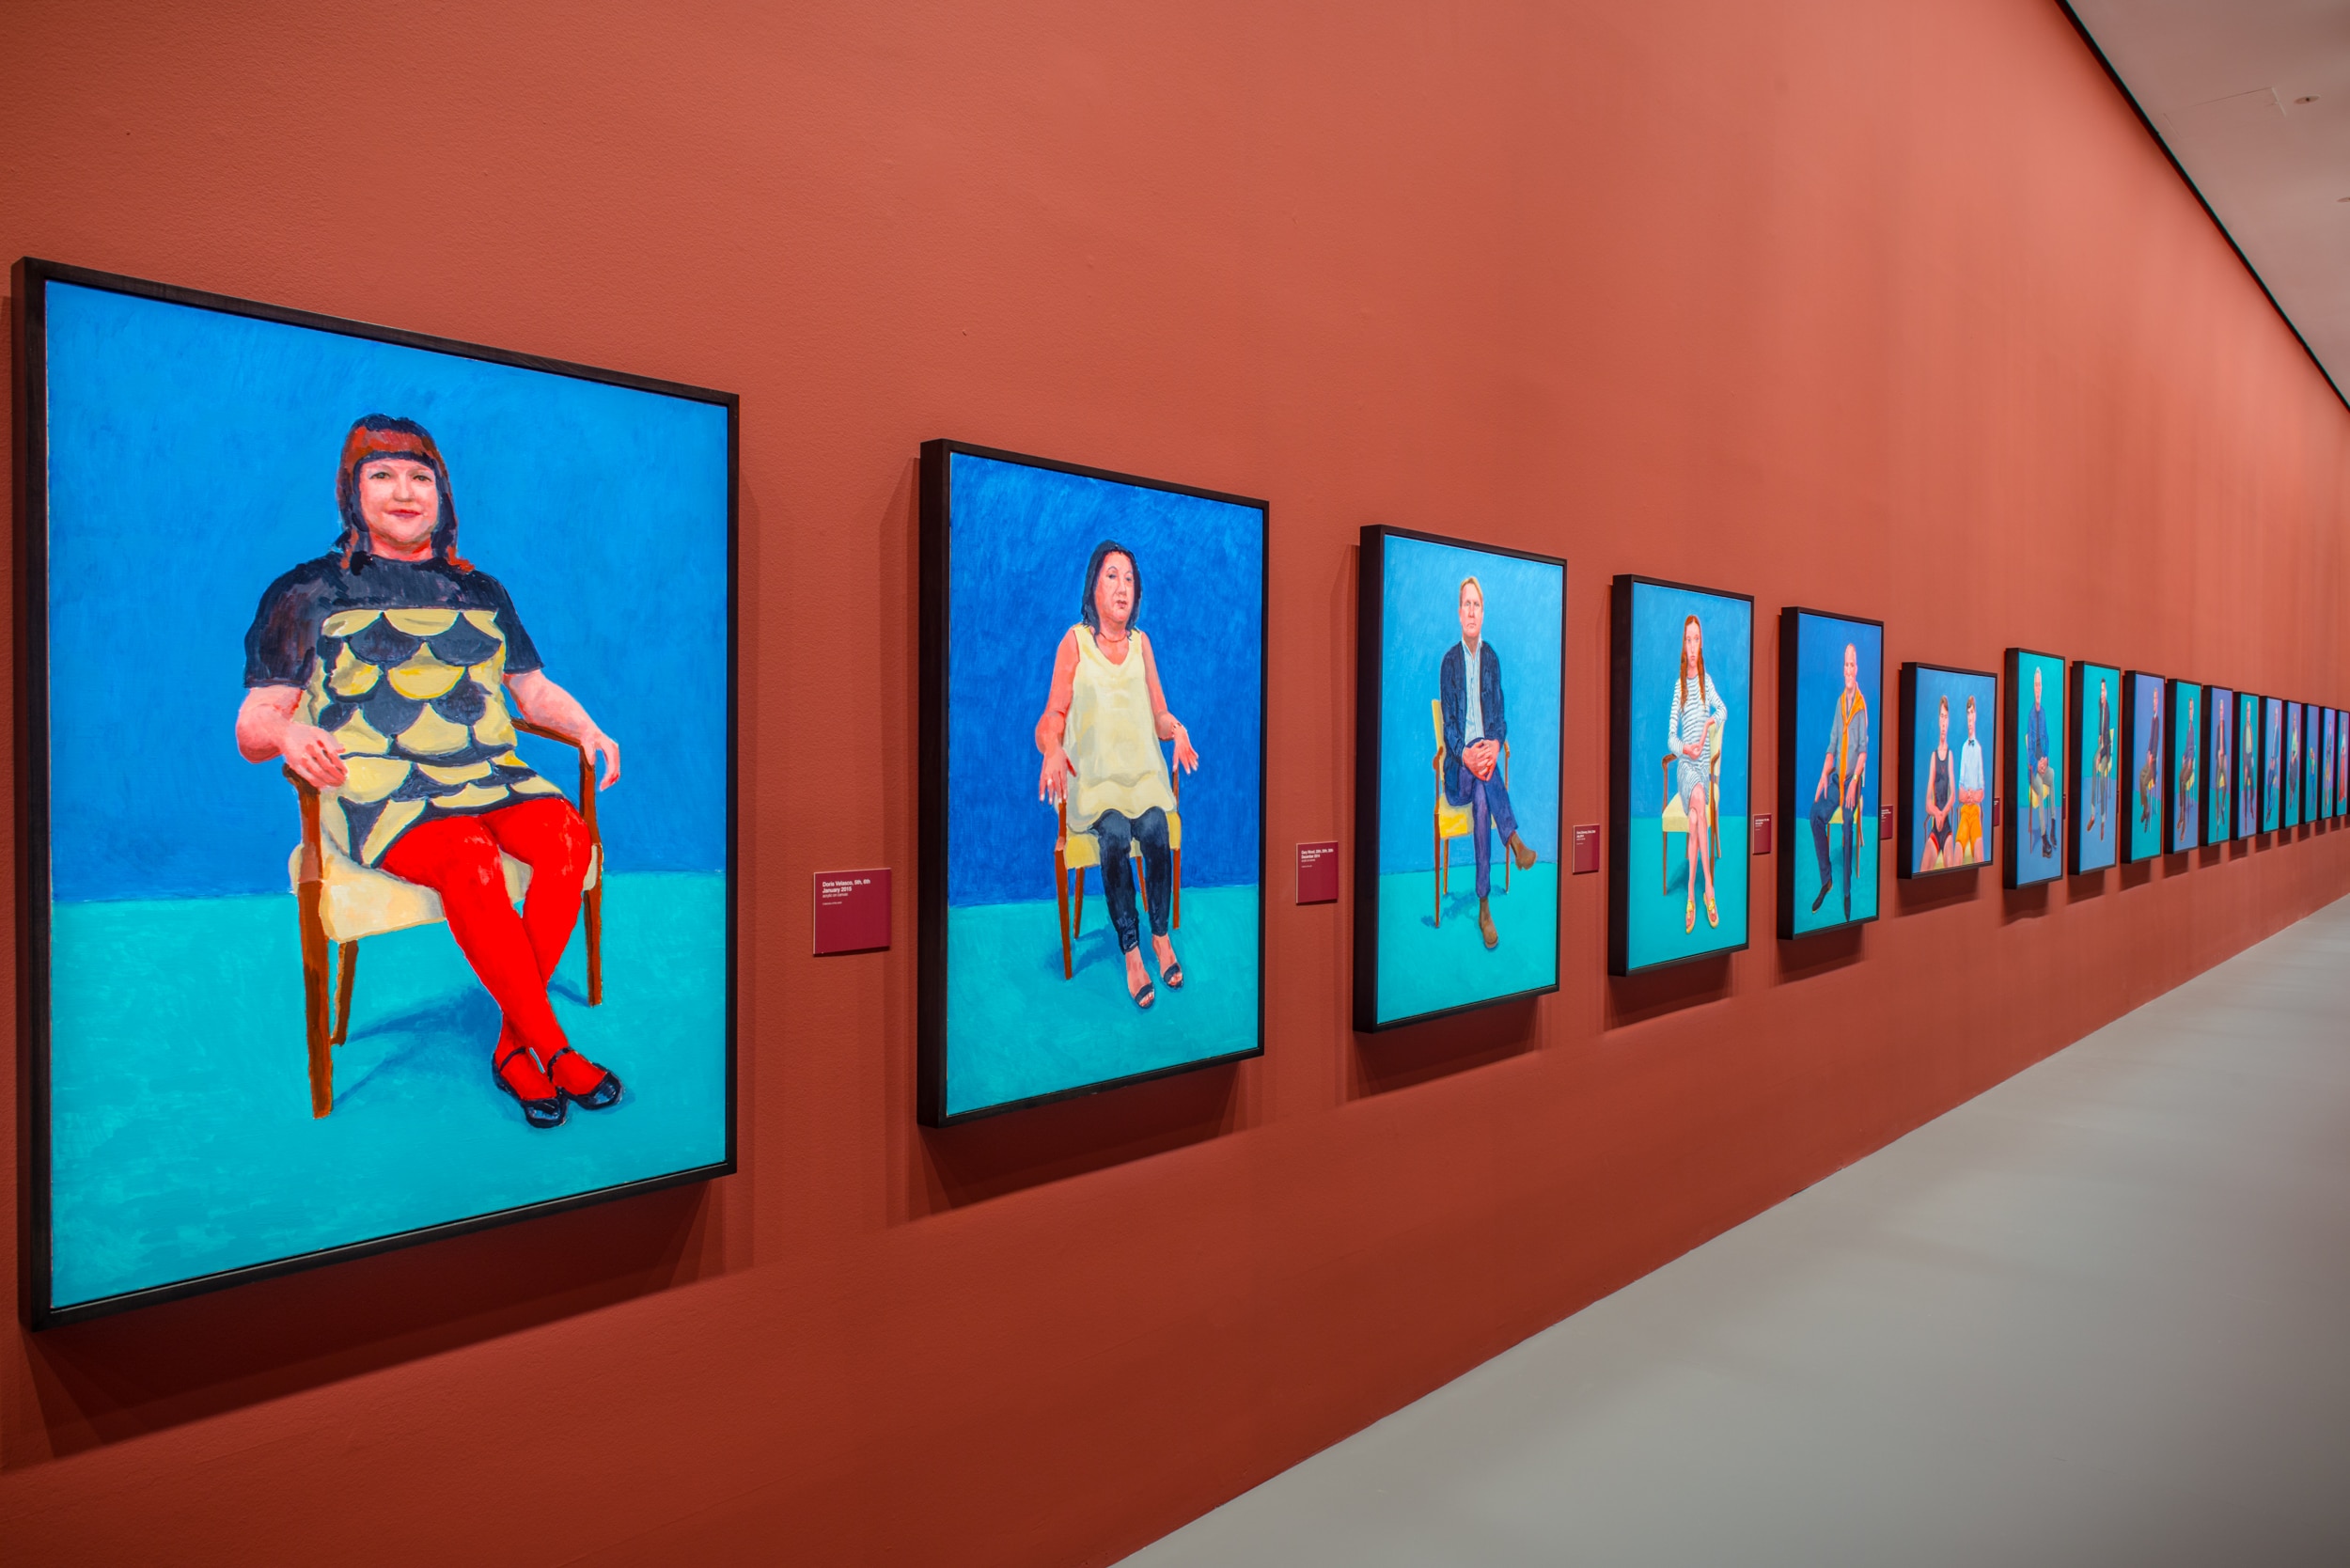 David Hockney digital art exhibition comes to Australia SBS News